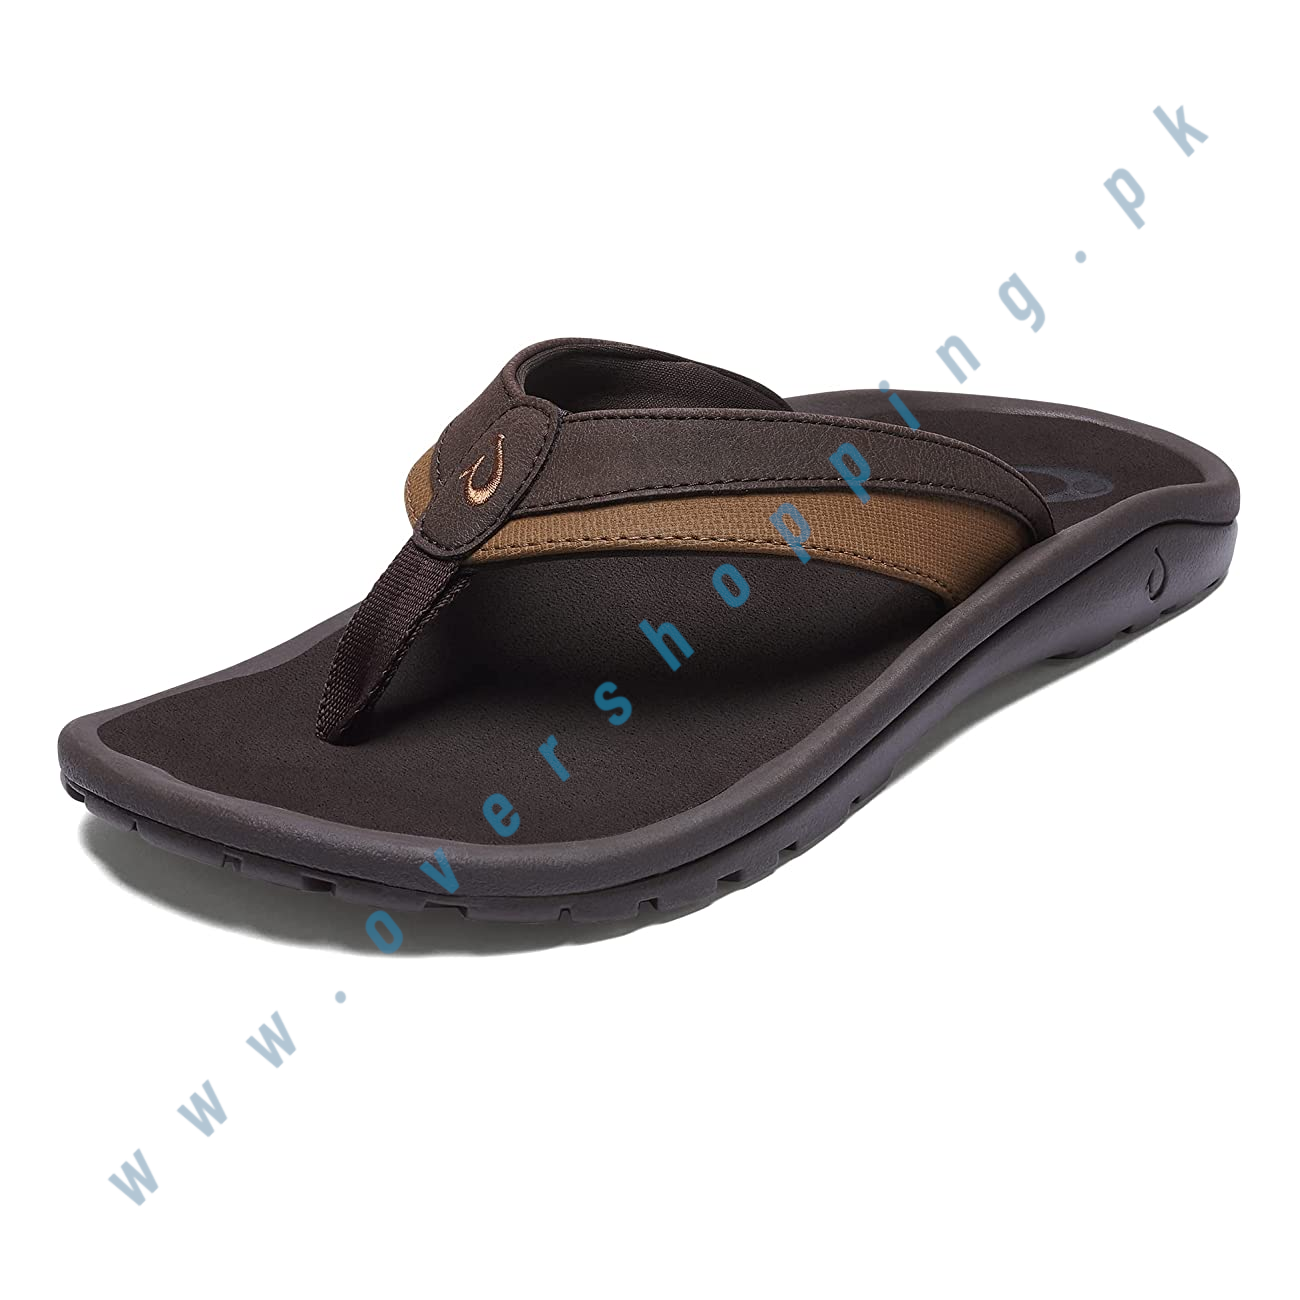 OLUKAI Men's Ohana Koa Beach Sandals - Quick-Dry & Lightweight Comfort Fit